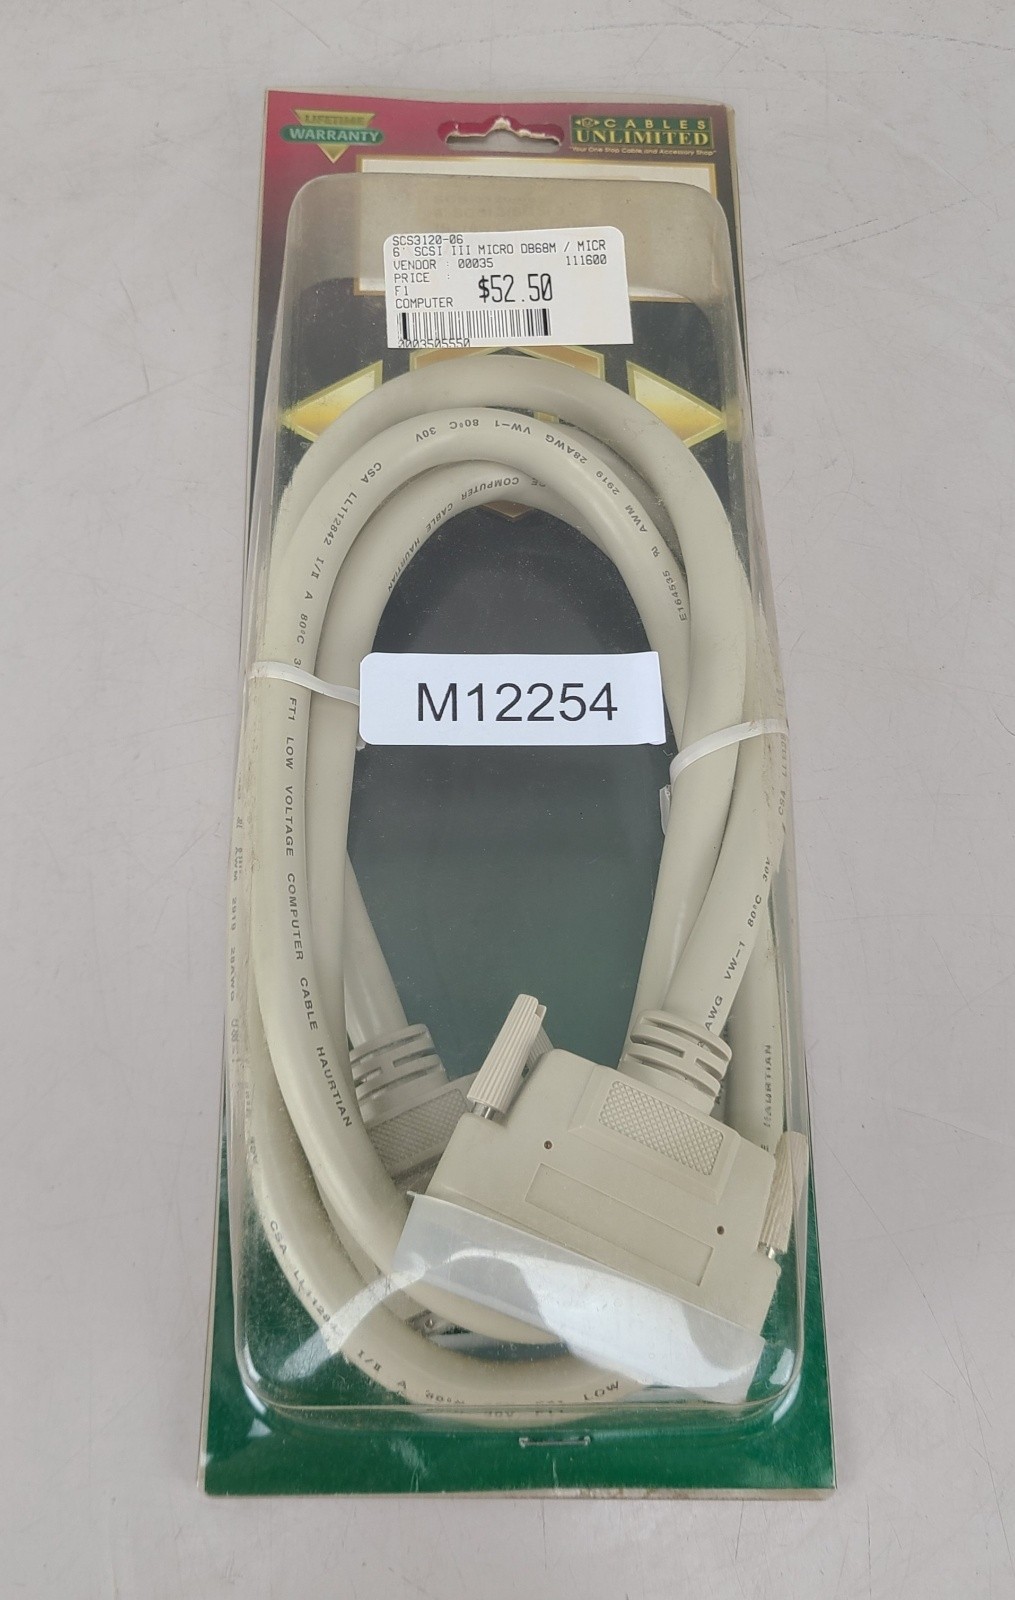 6ft SCSI-3 (HPDB68) to SCSI-3 (HPDB68) External 68-Pin Male/Male Cable, SC-311